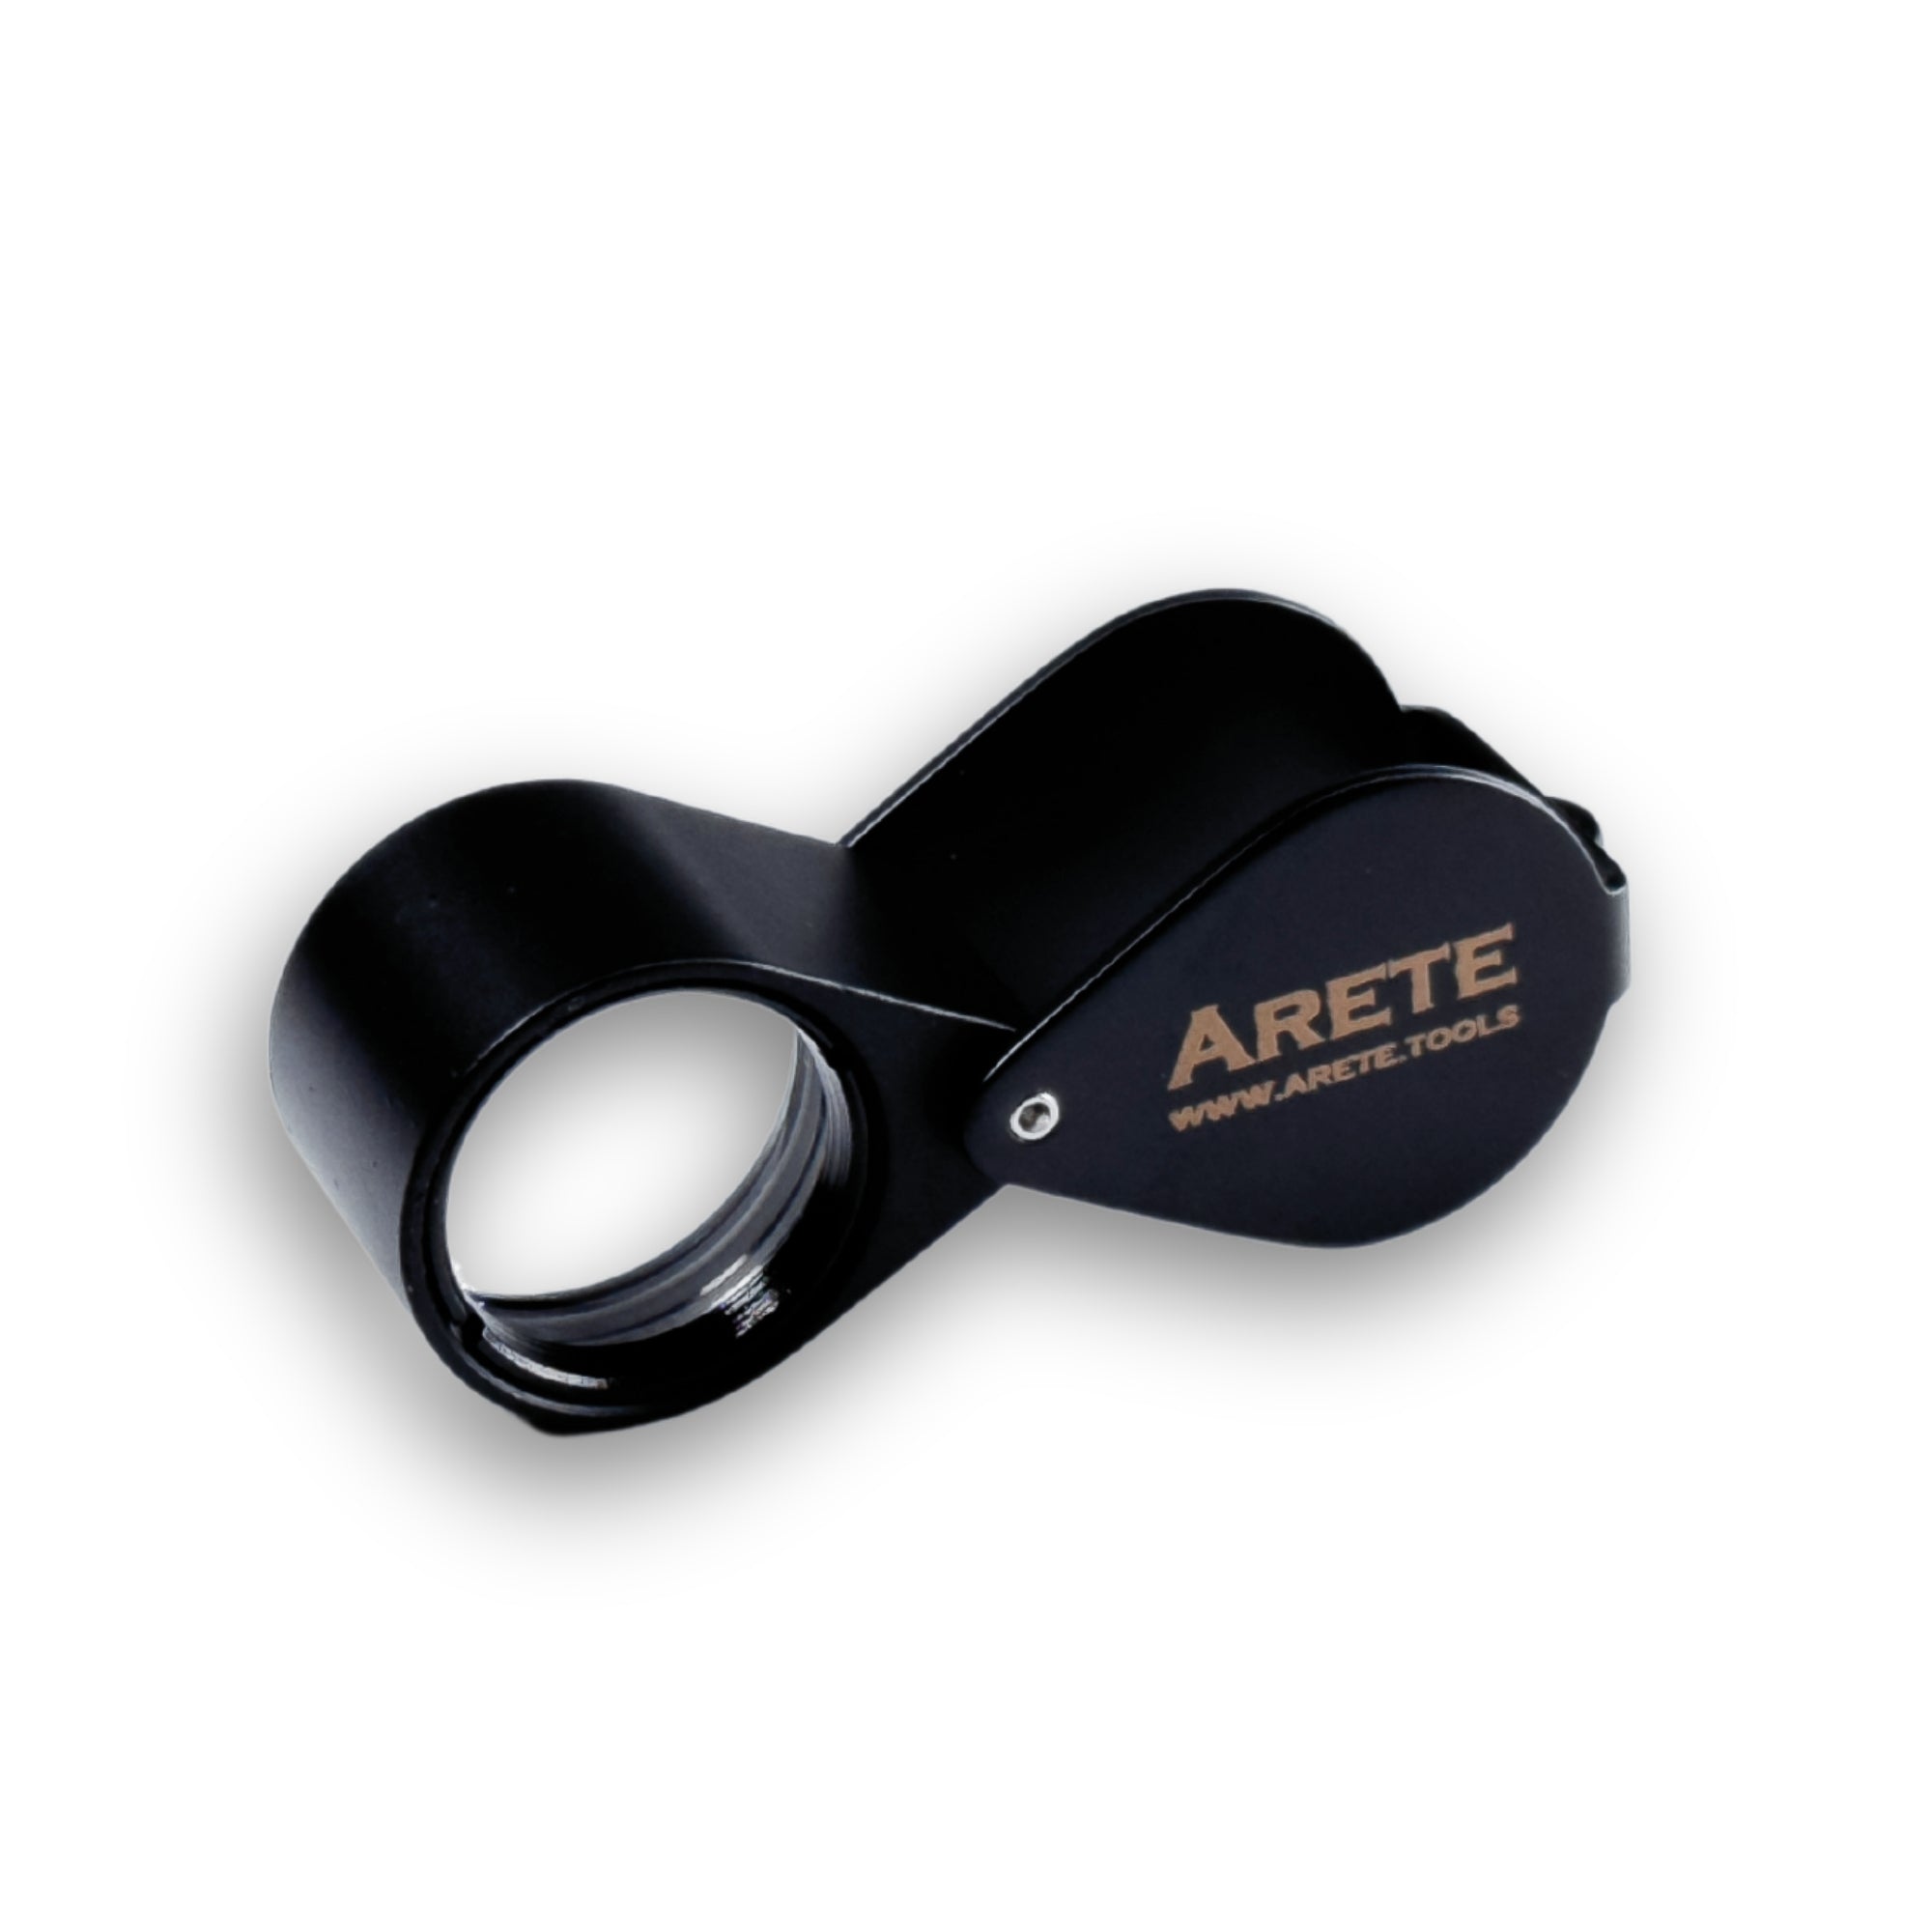 Arete jewelry loupe black 10x 18 mm